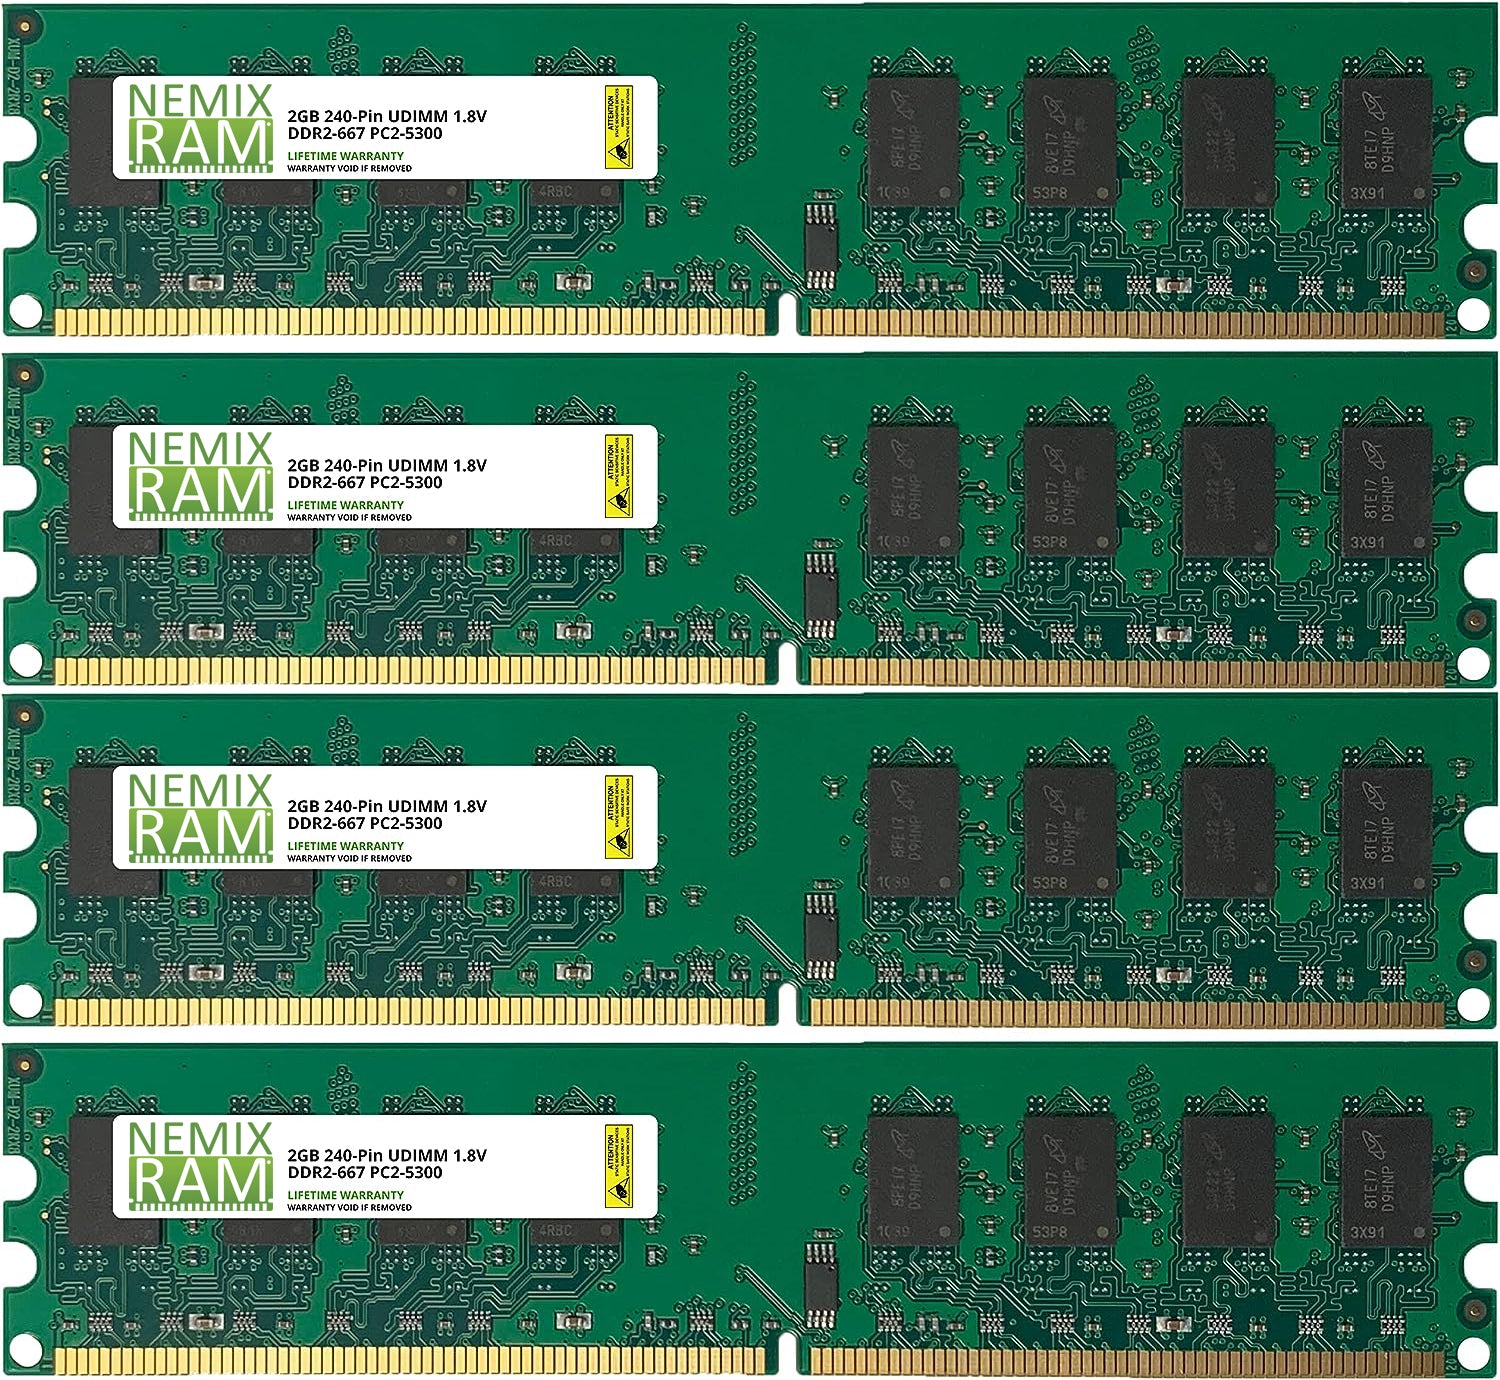 DDR2 UDIMM Desktop PC RAM Memory Upgrade